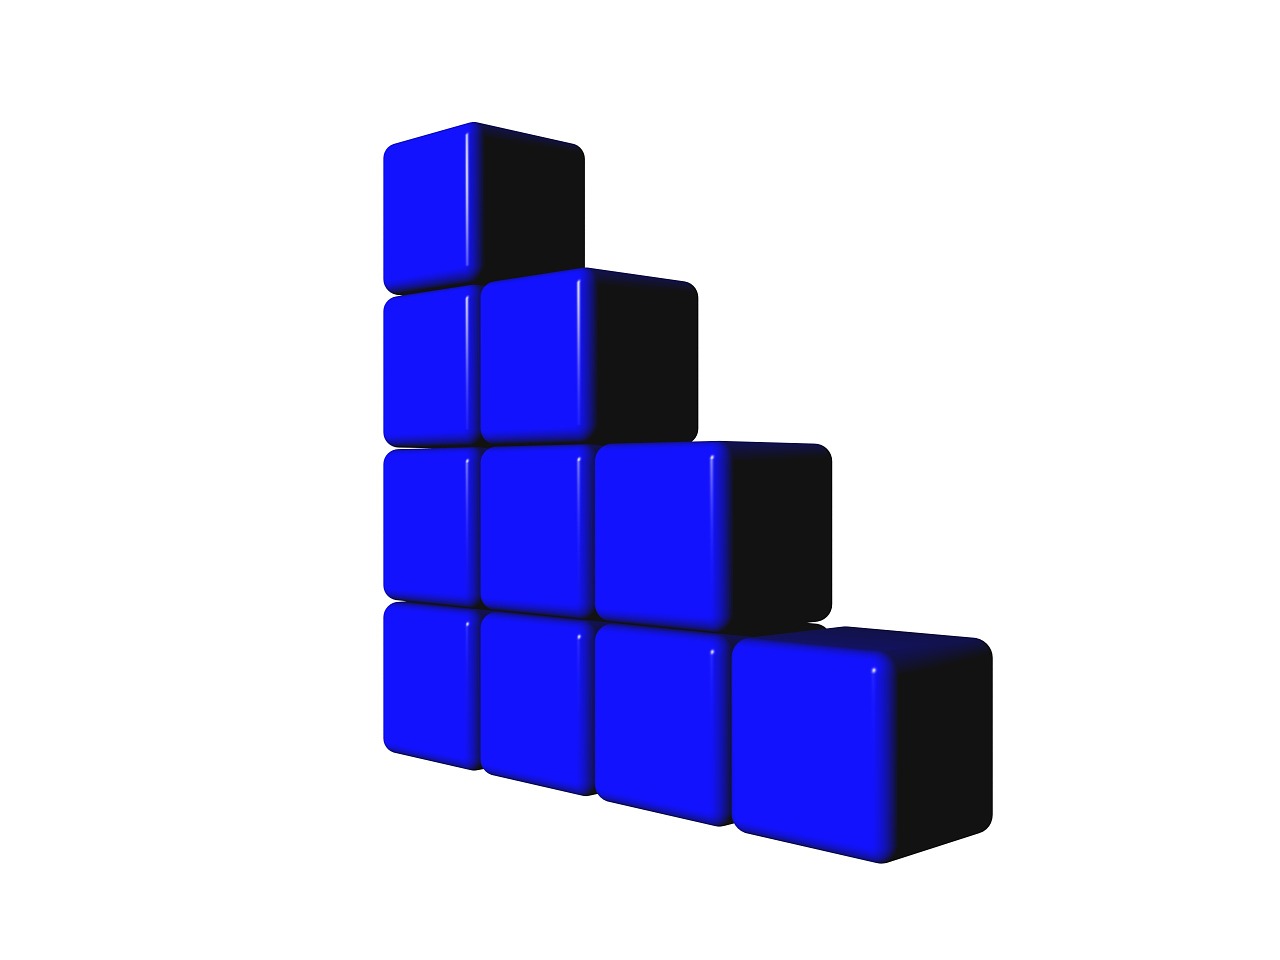 Blue cube. Блок данных. Информация о блоке. Блок данных без фона. Loss graphic.